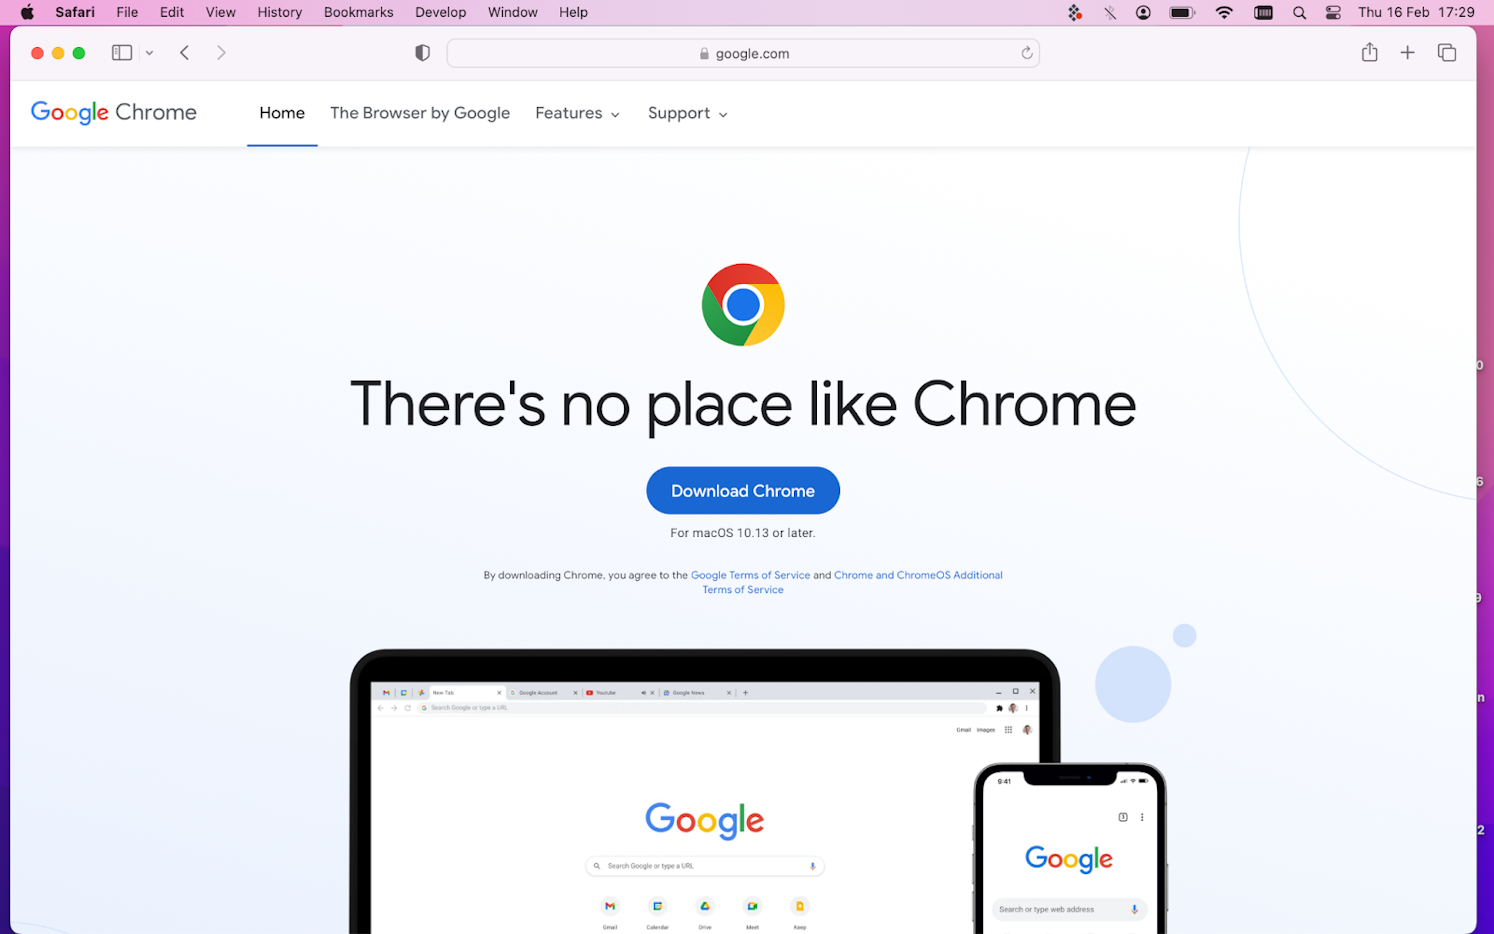 how do i install google chrome on my mac